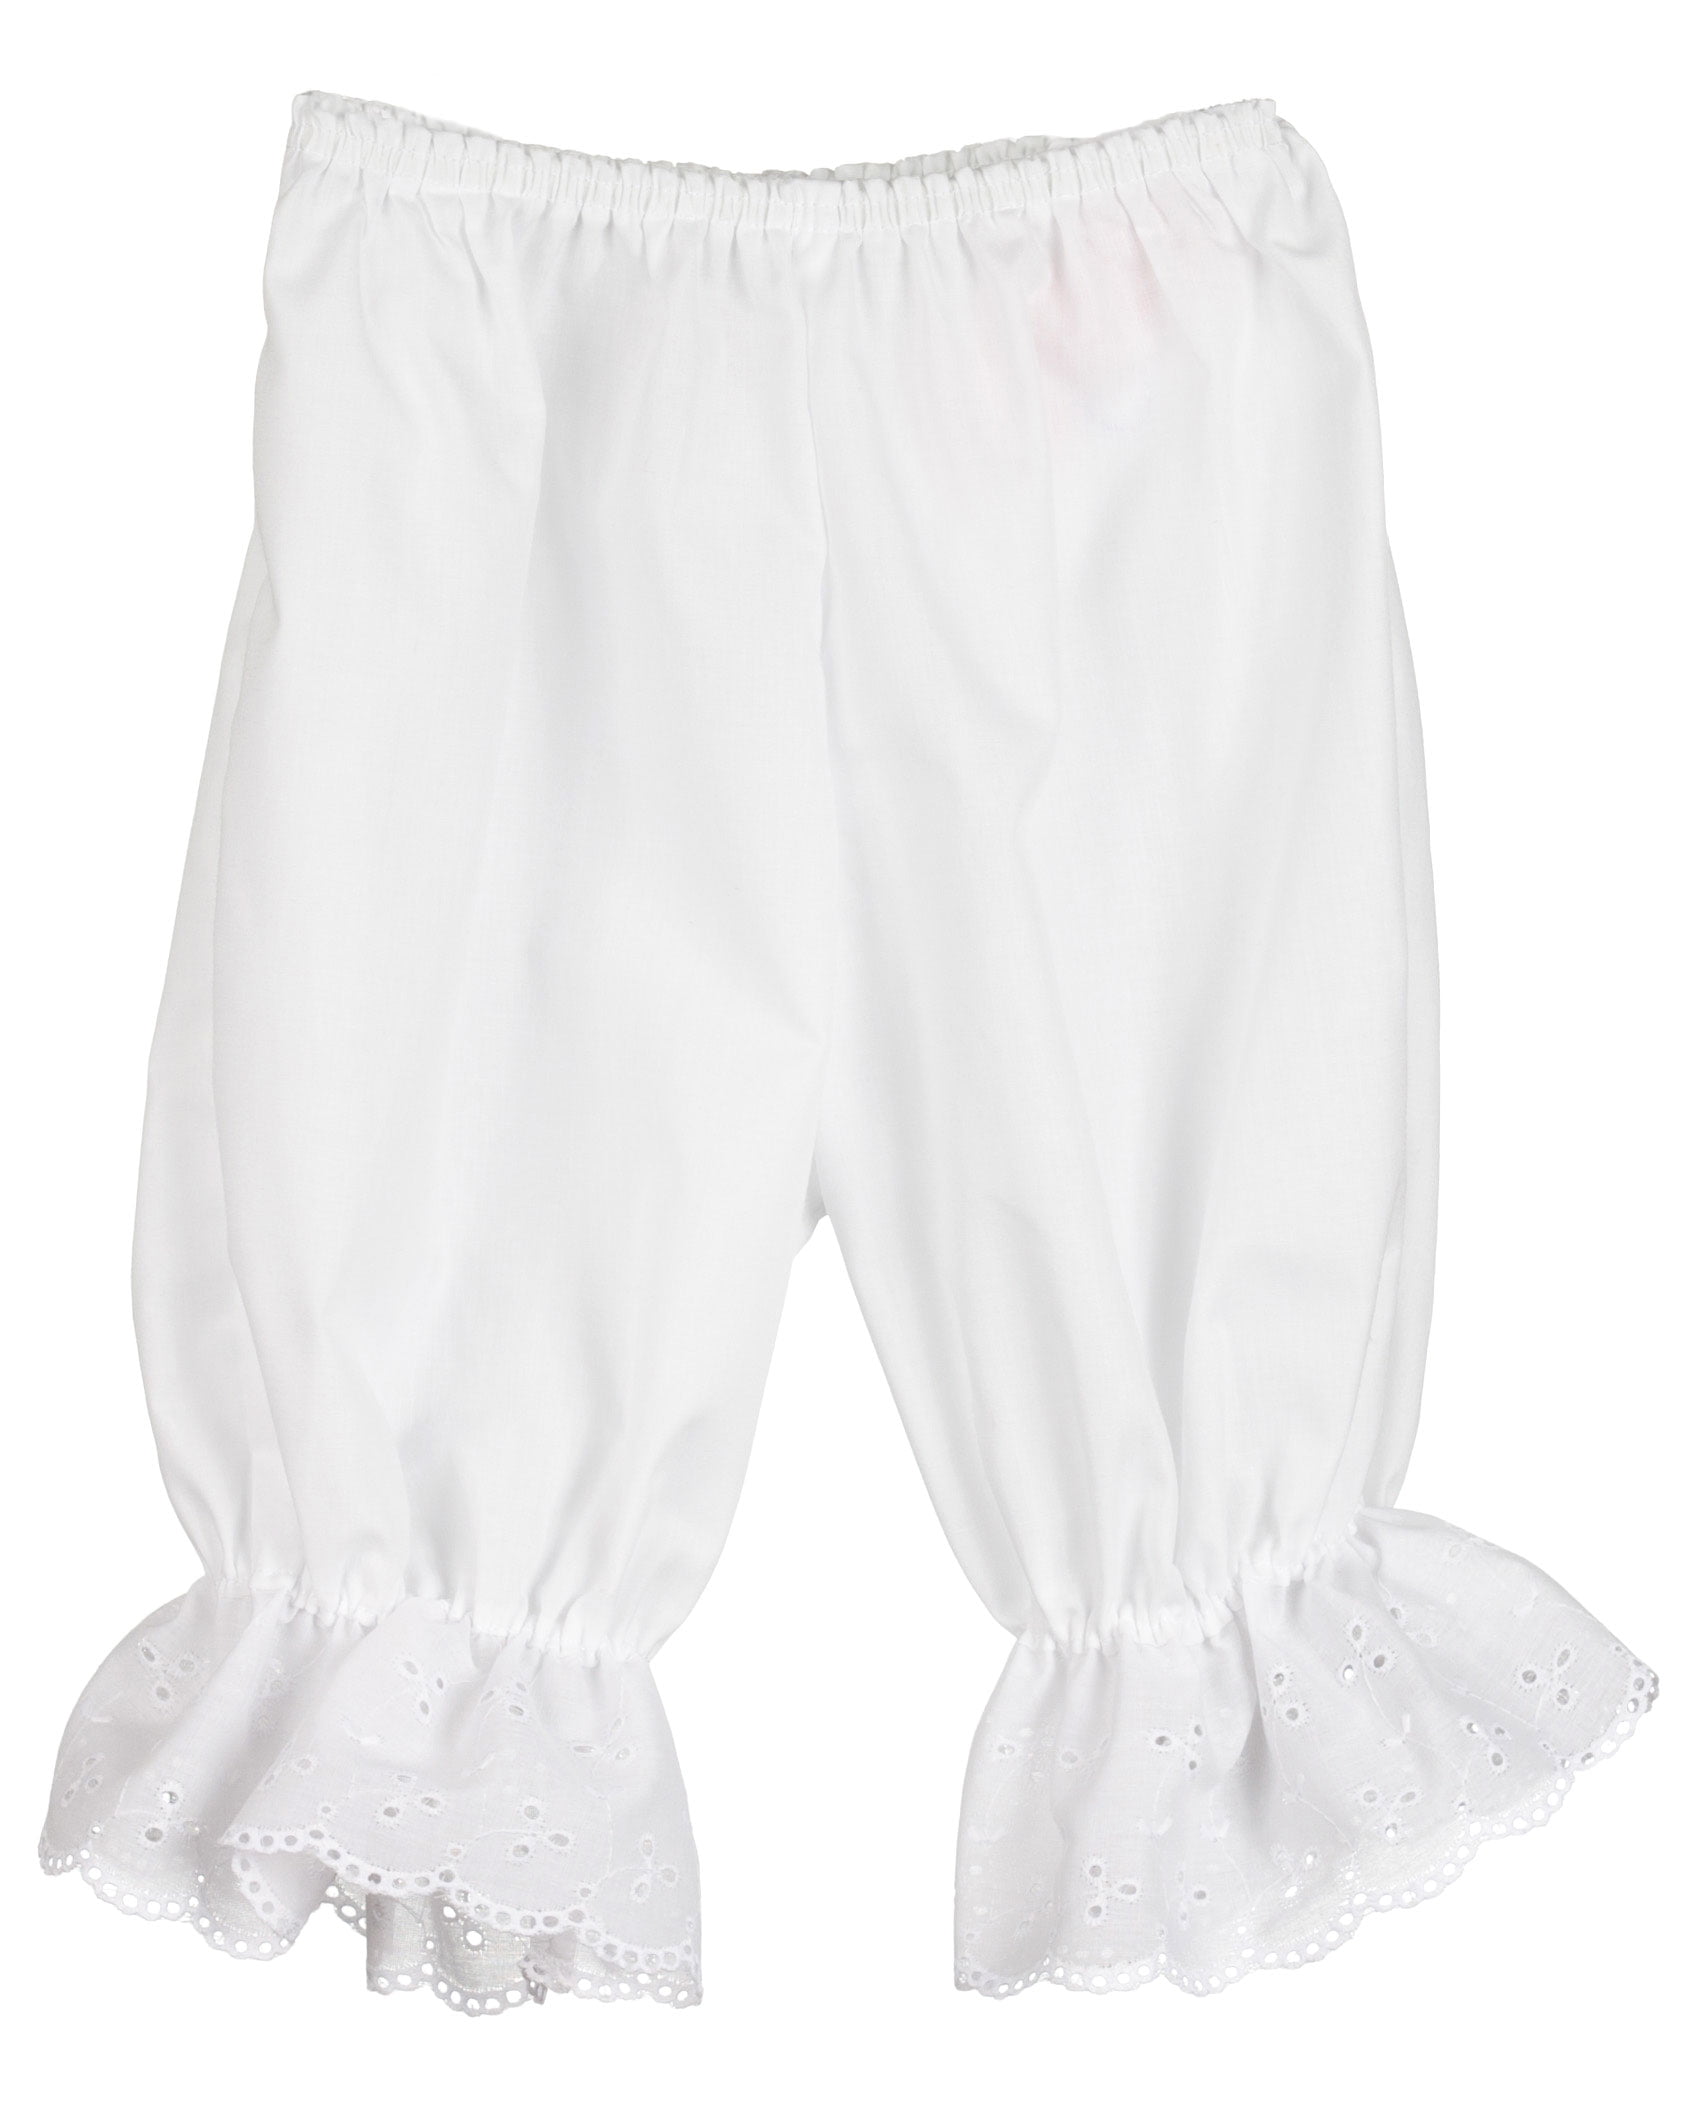 White Pantaloon Pettipants Bloomer Under-pants, 3m - 6x - Walmart.com